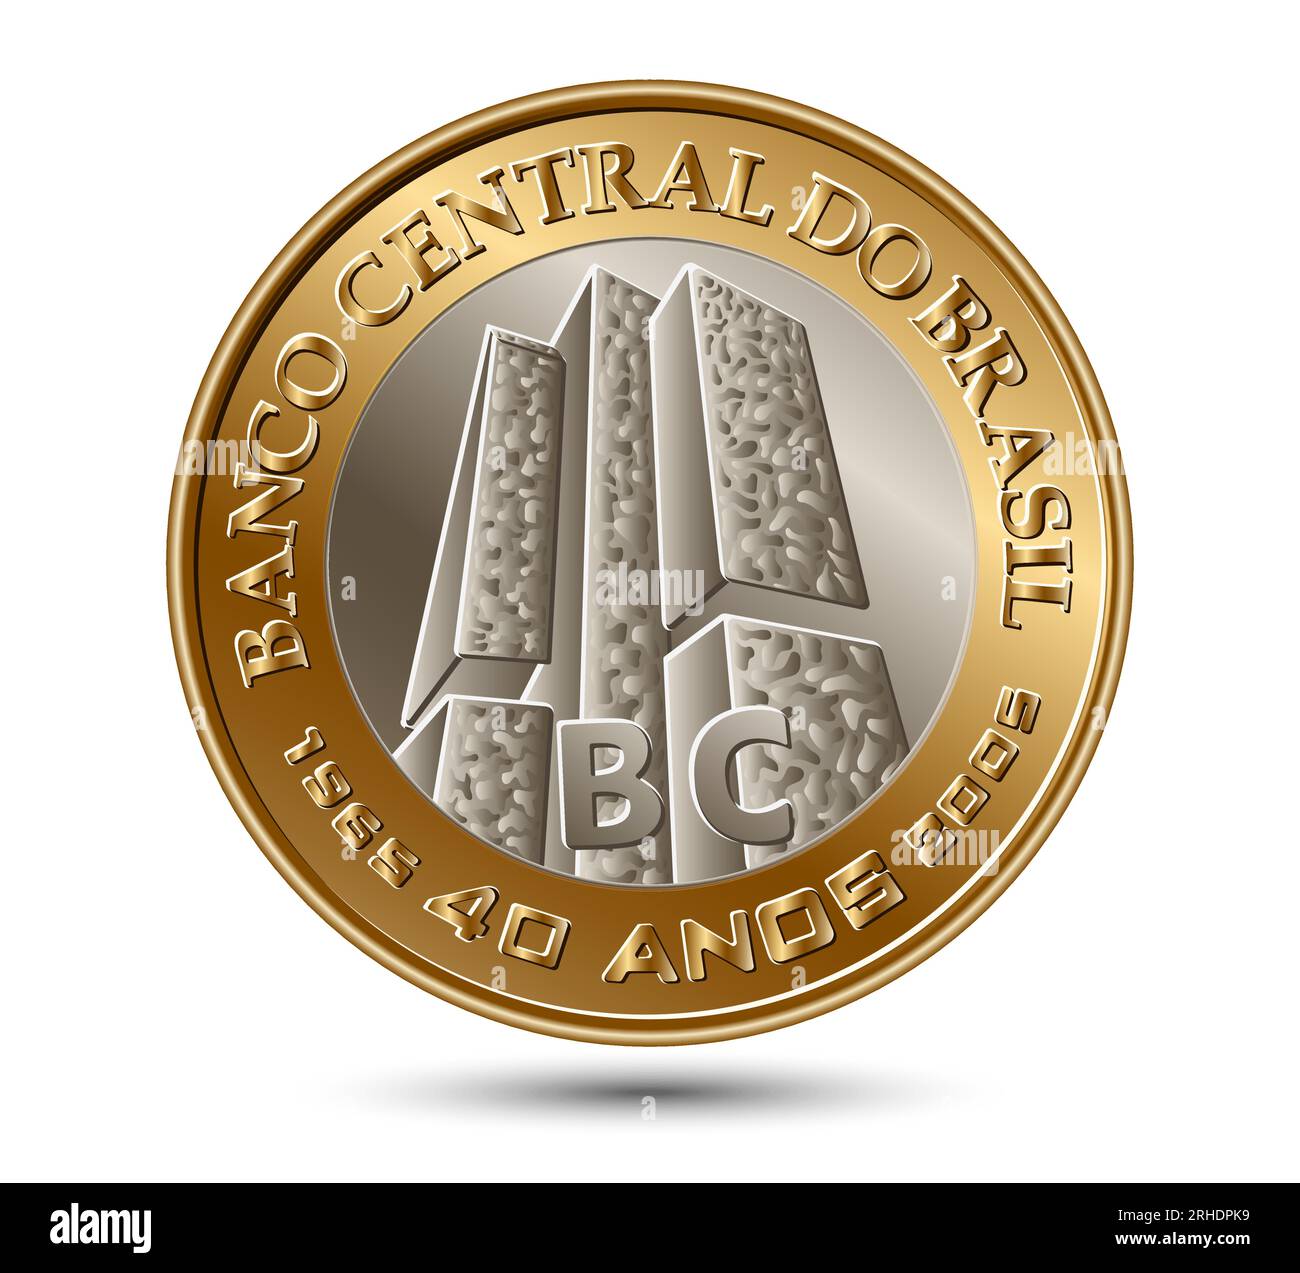 Moneta brasiliana commemorativa "One Real", "Forty Years Central Bank (2005)" isolata su sfondo bianco. Illustrazione vettoriale. Illustrazione Vettoriale